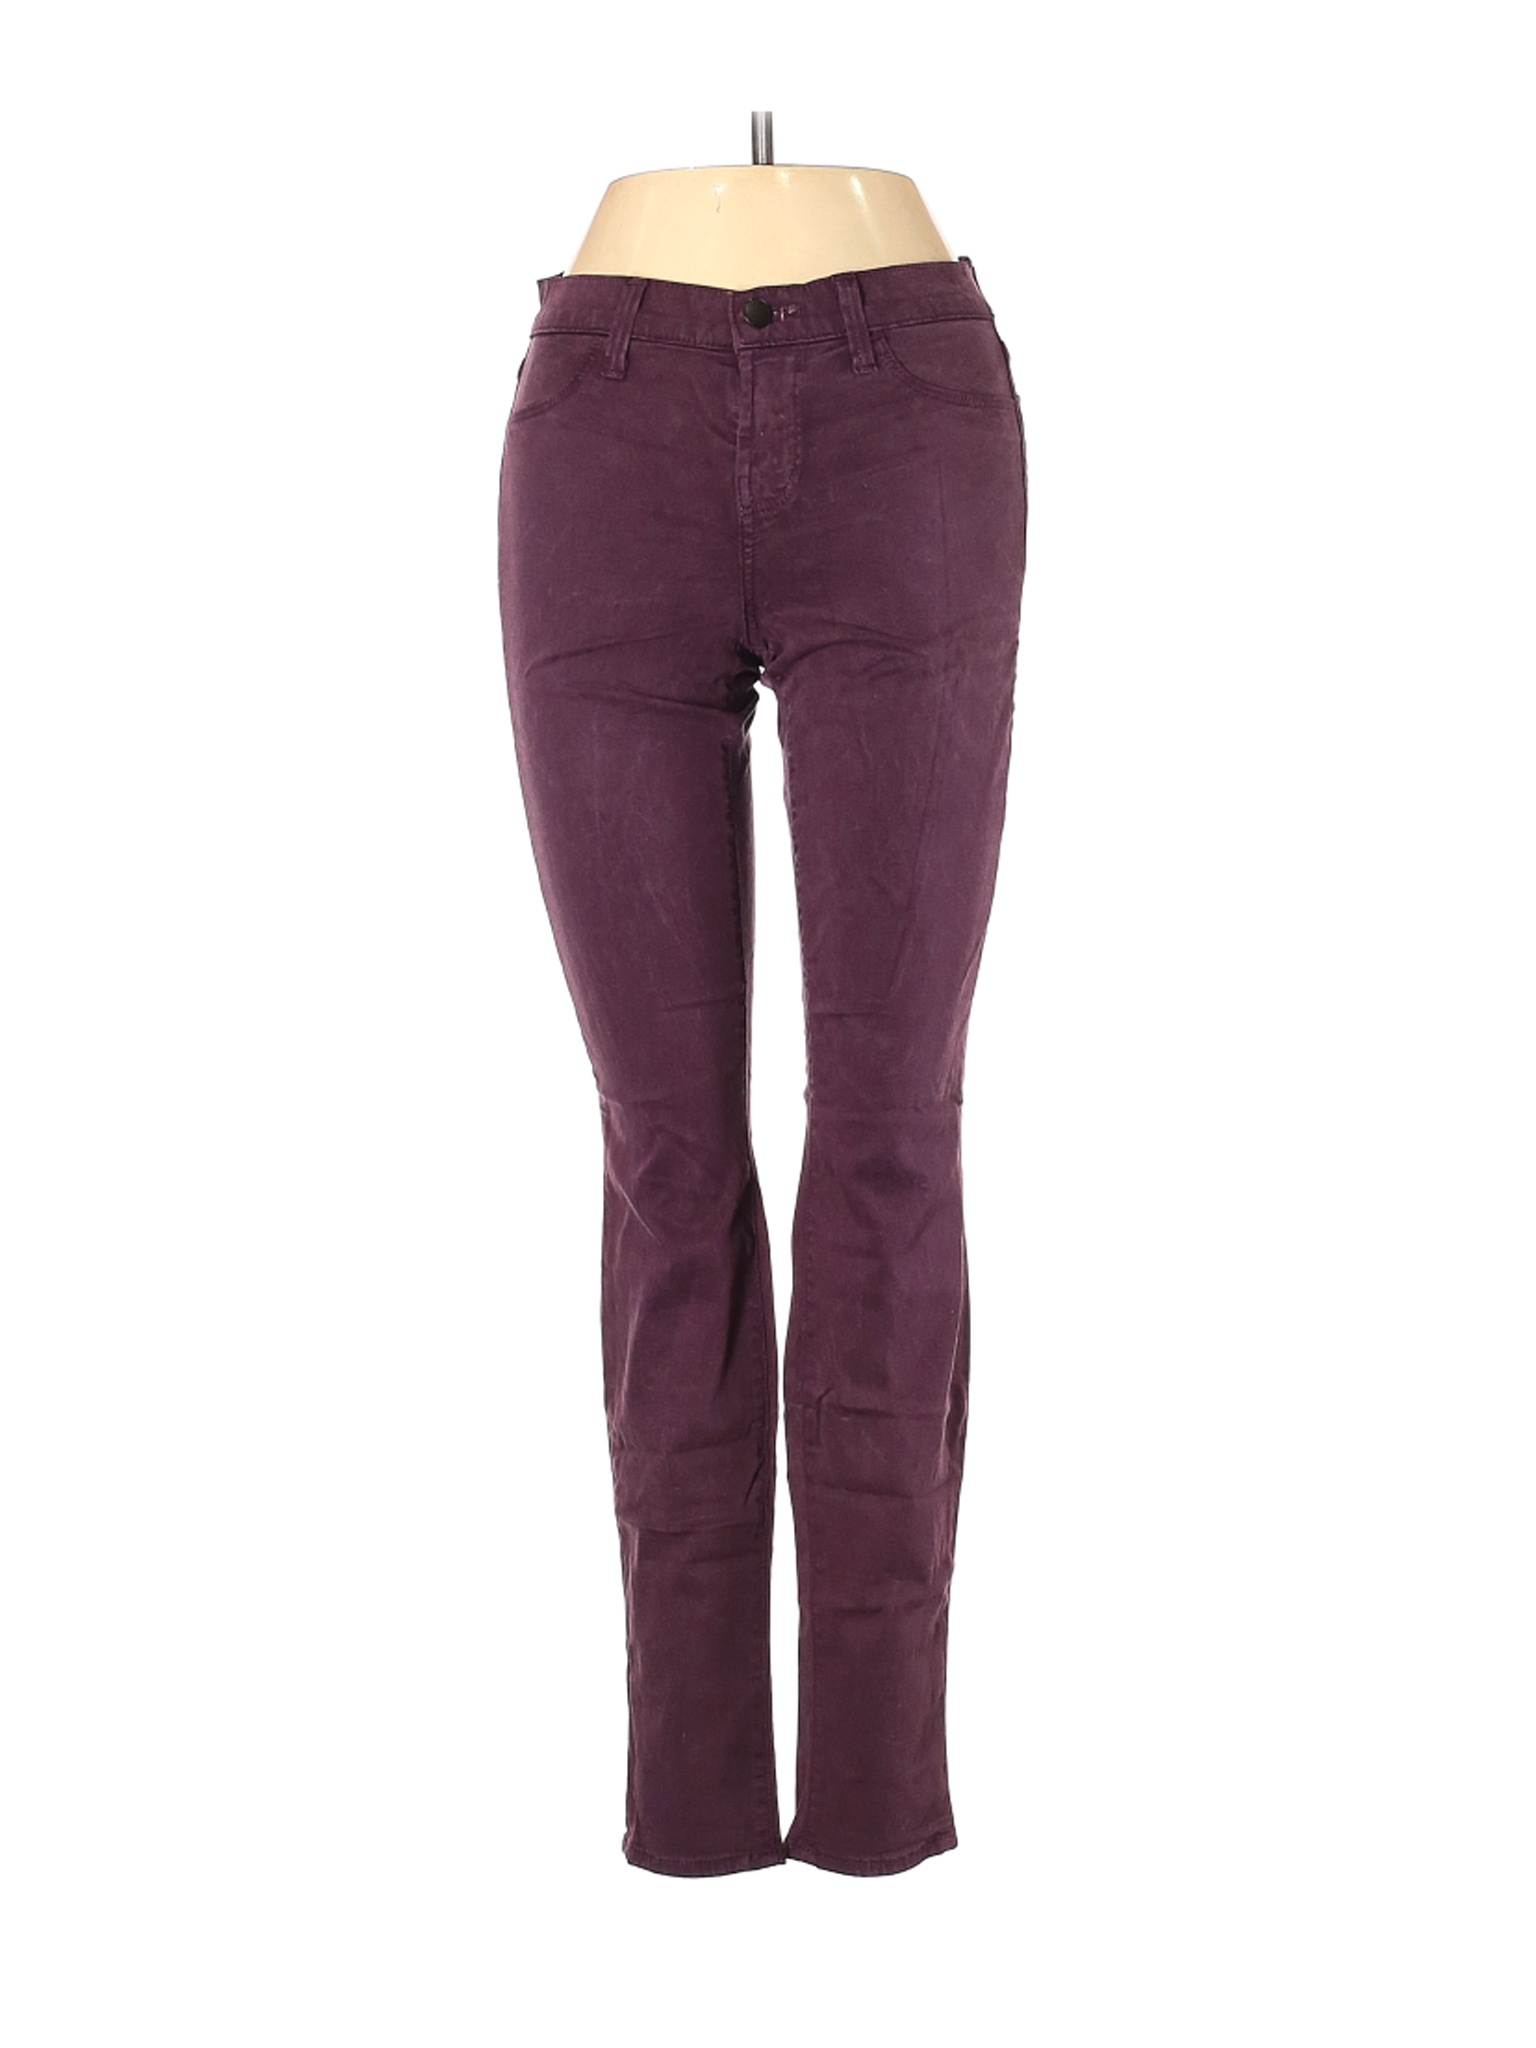 purple brand jeans discount code